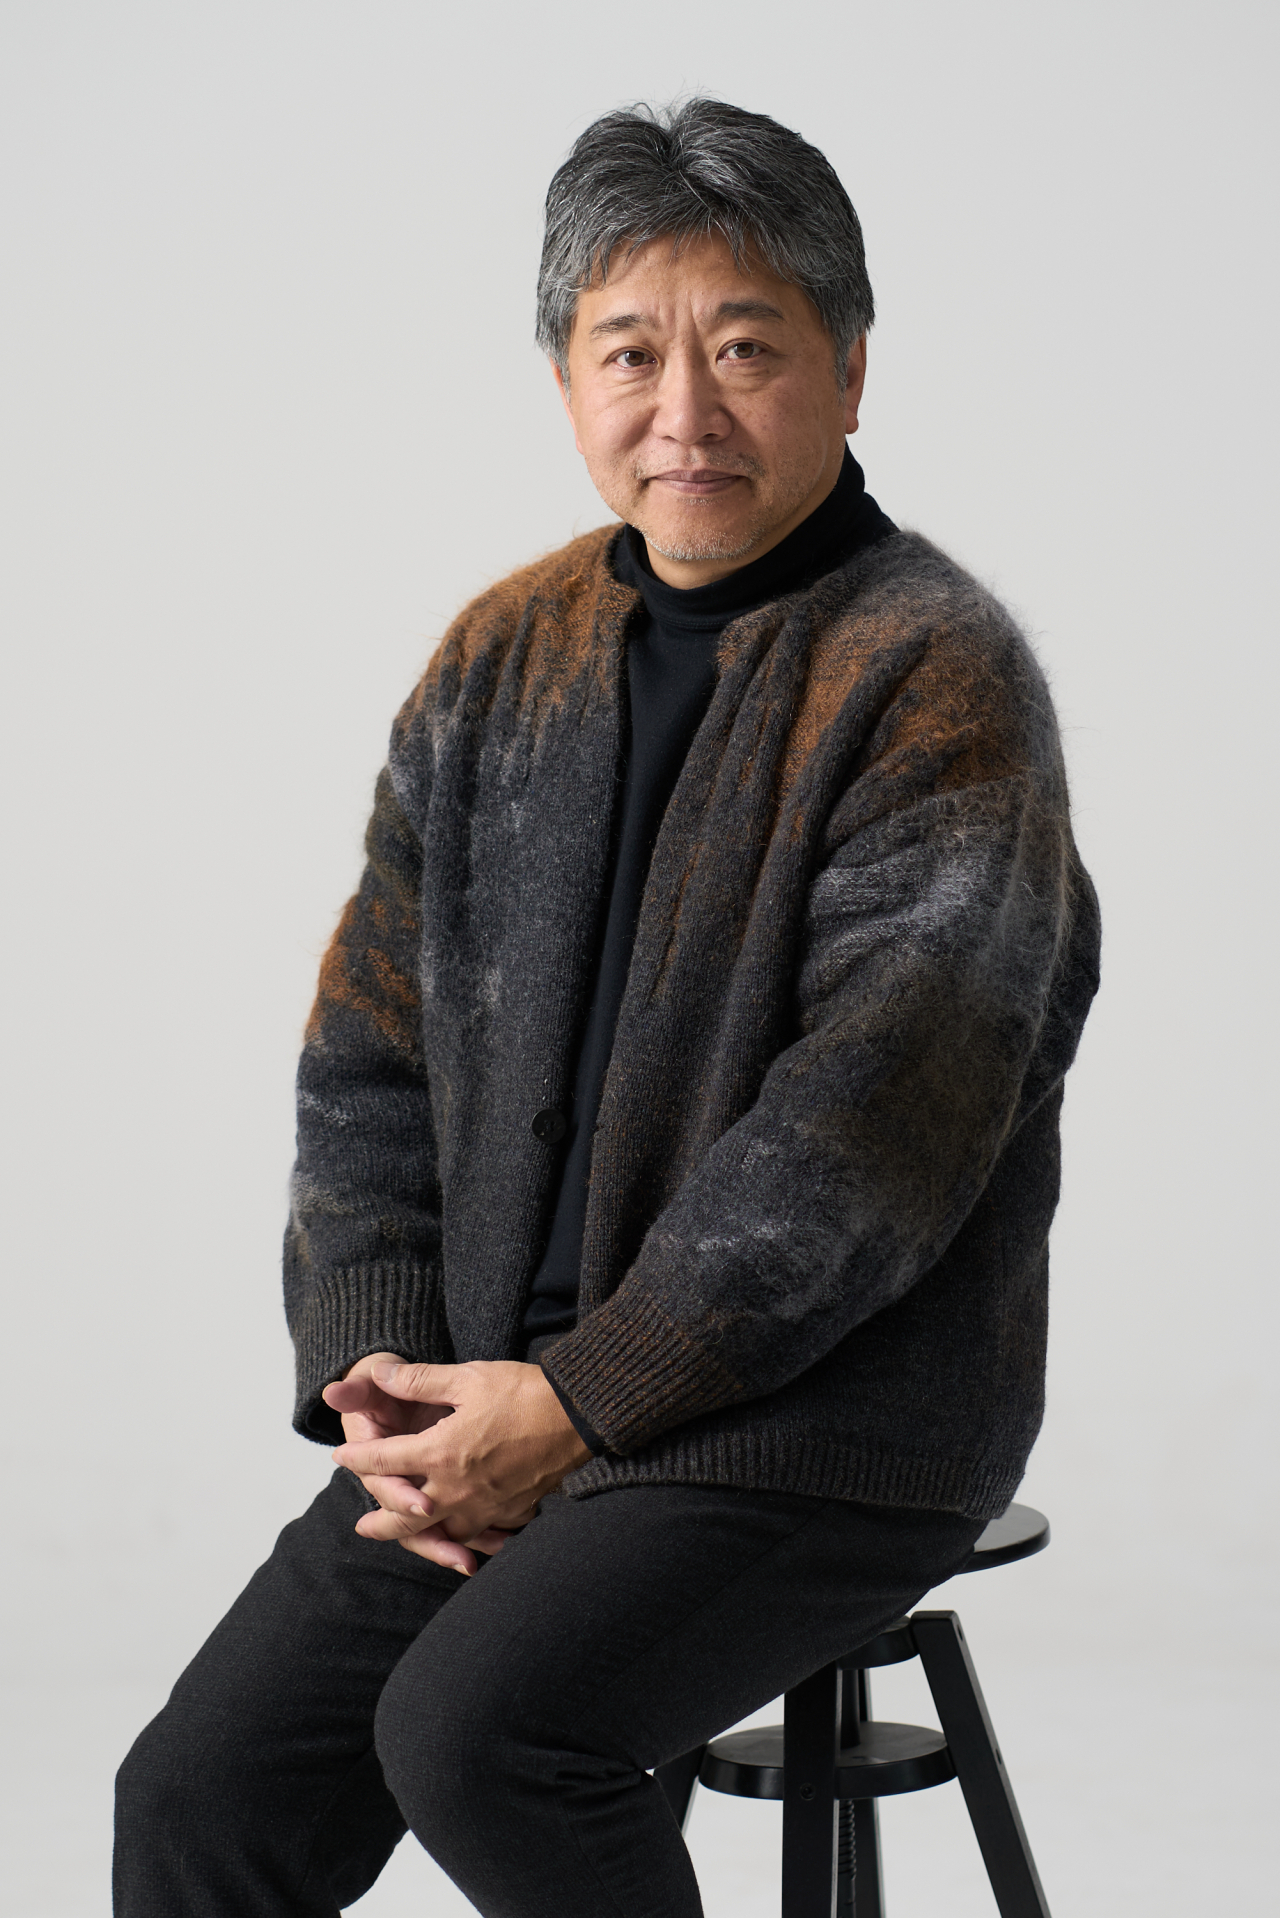 Japanese filmmaker Hirokazu Koreeda (Media Castle)